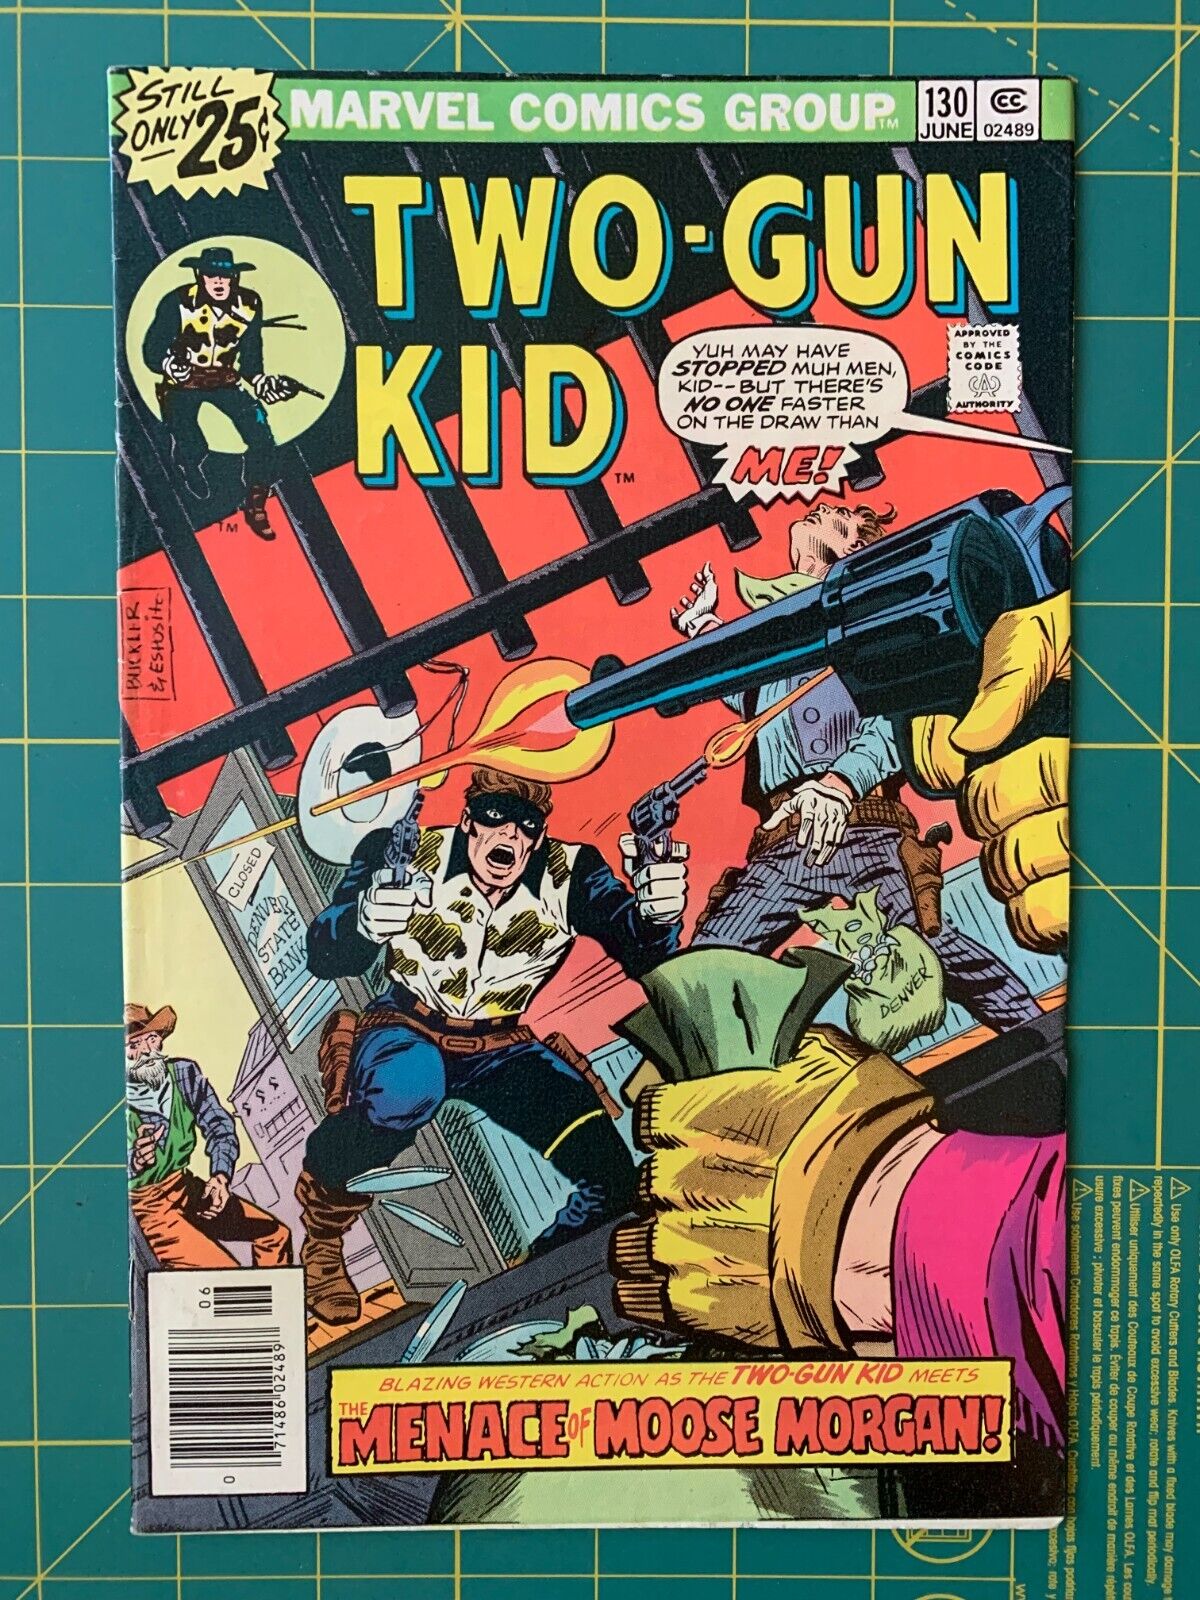 Two-Gun Kid #130 - Jun 1976 - (9021)